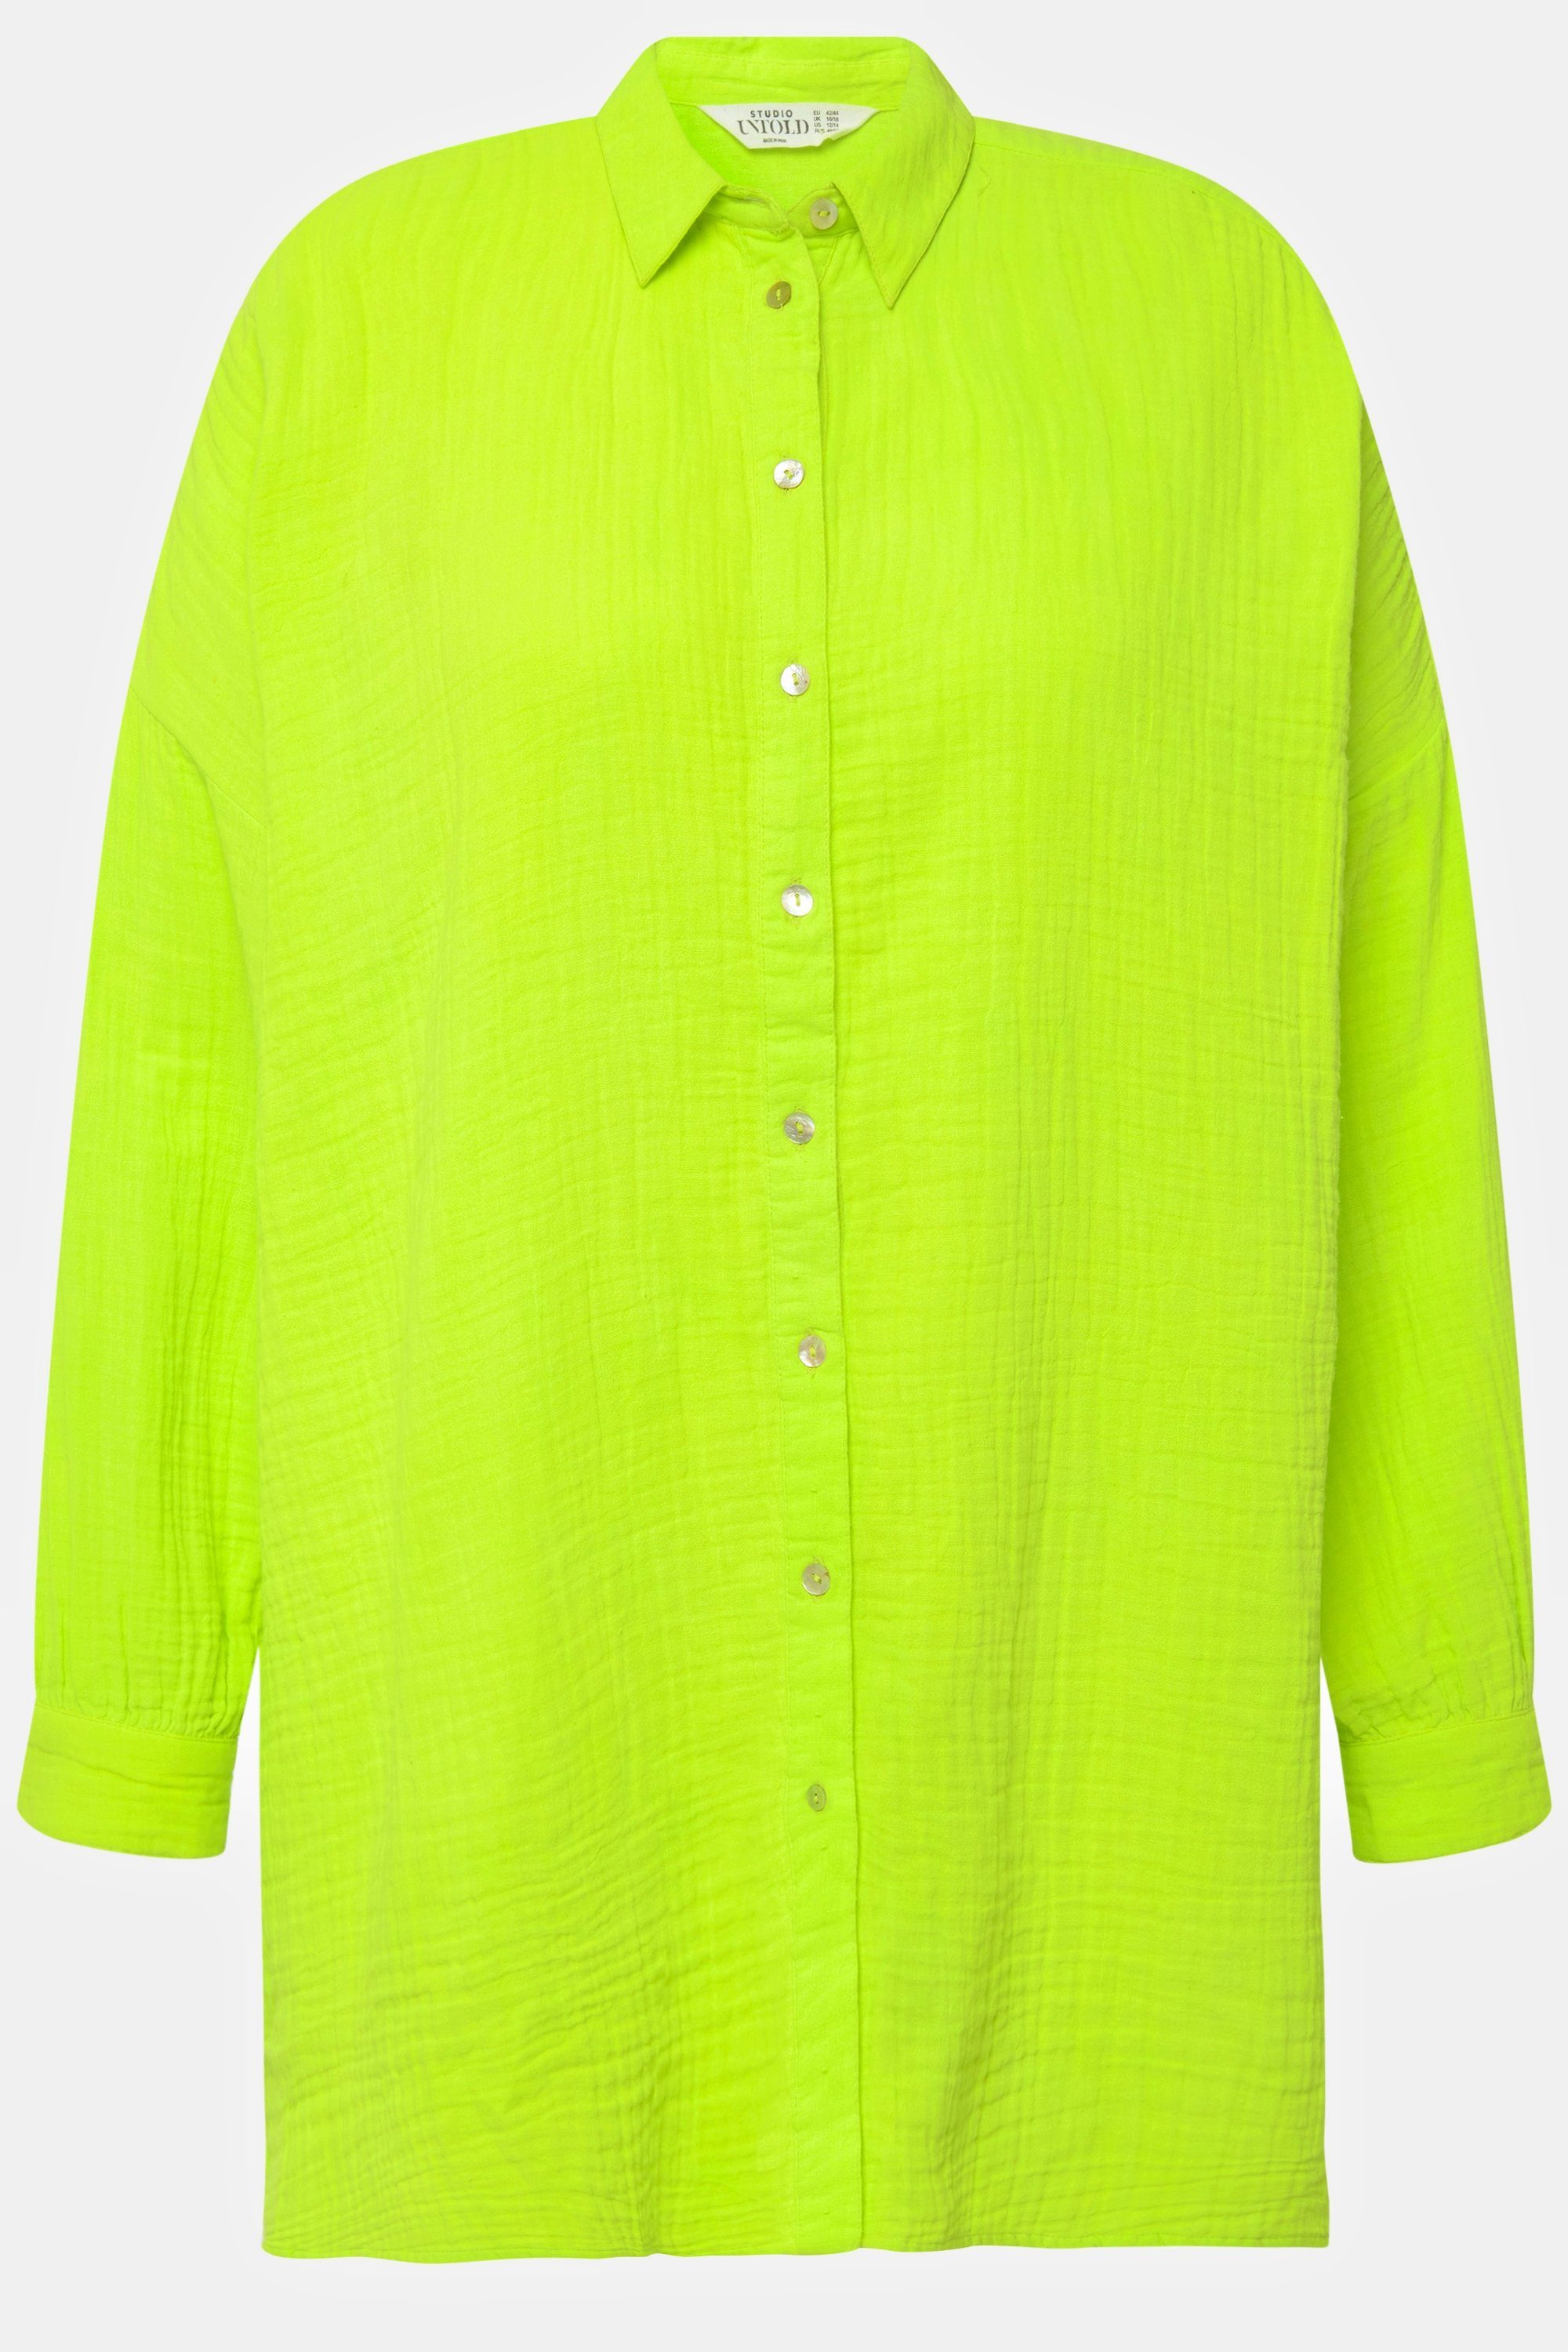 Studio Untold Hemdbluse Musselin Bluse gelb oversized Langarm neon Hemdkragen Neon